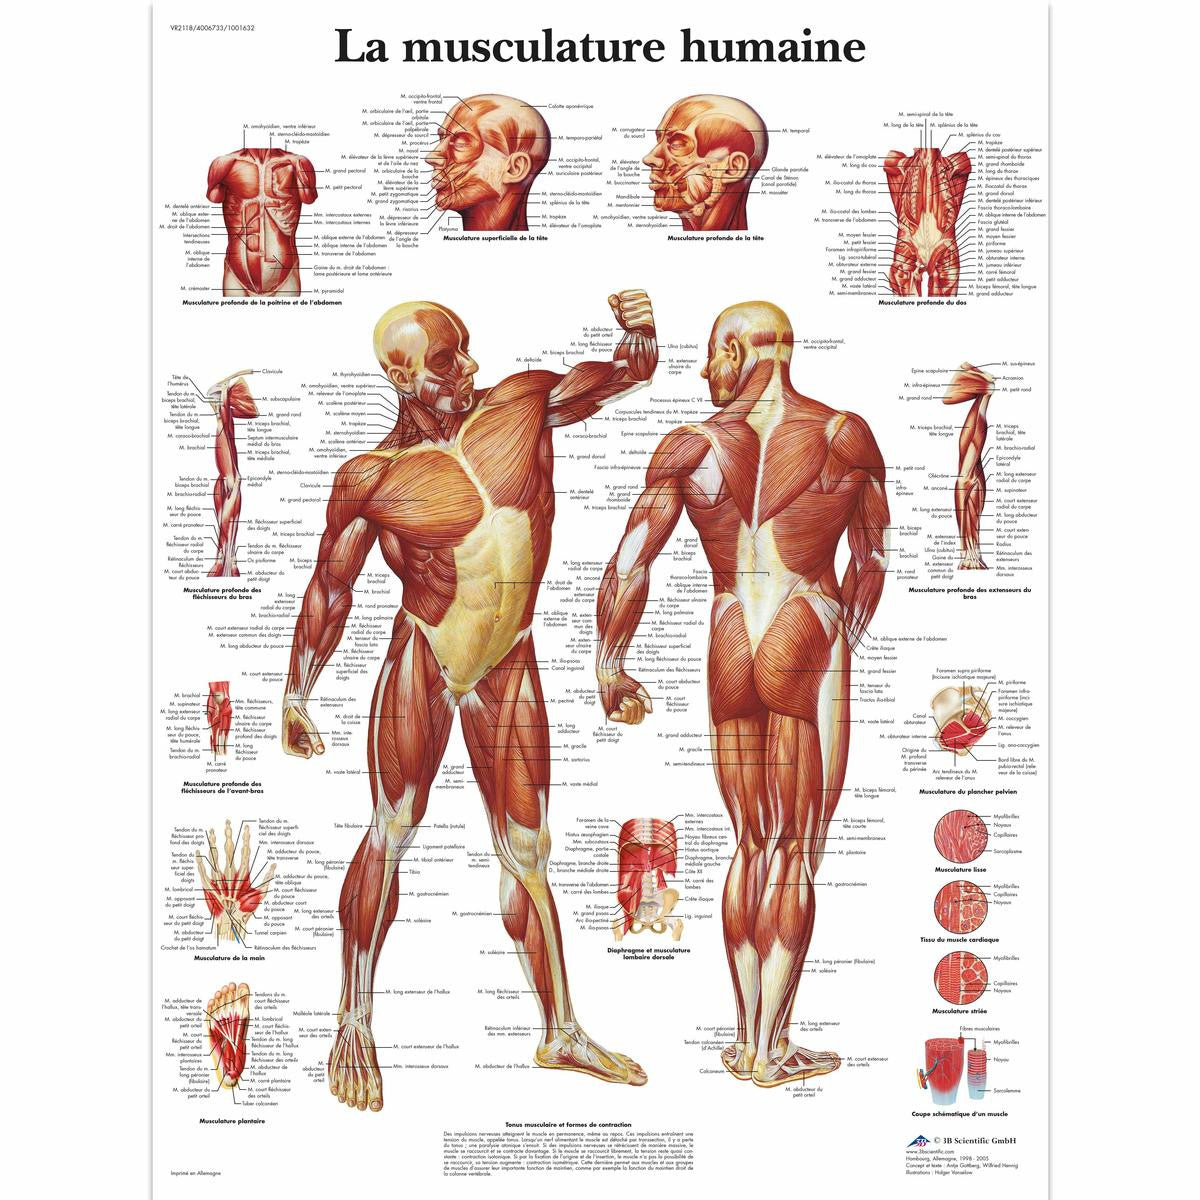 La Musculature humaine | Poster, laminated | 20" x 26"